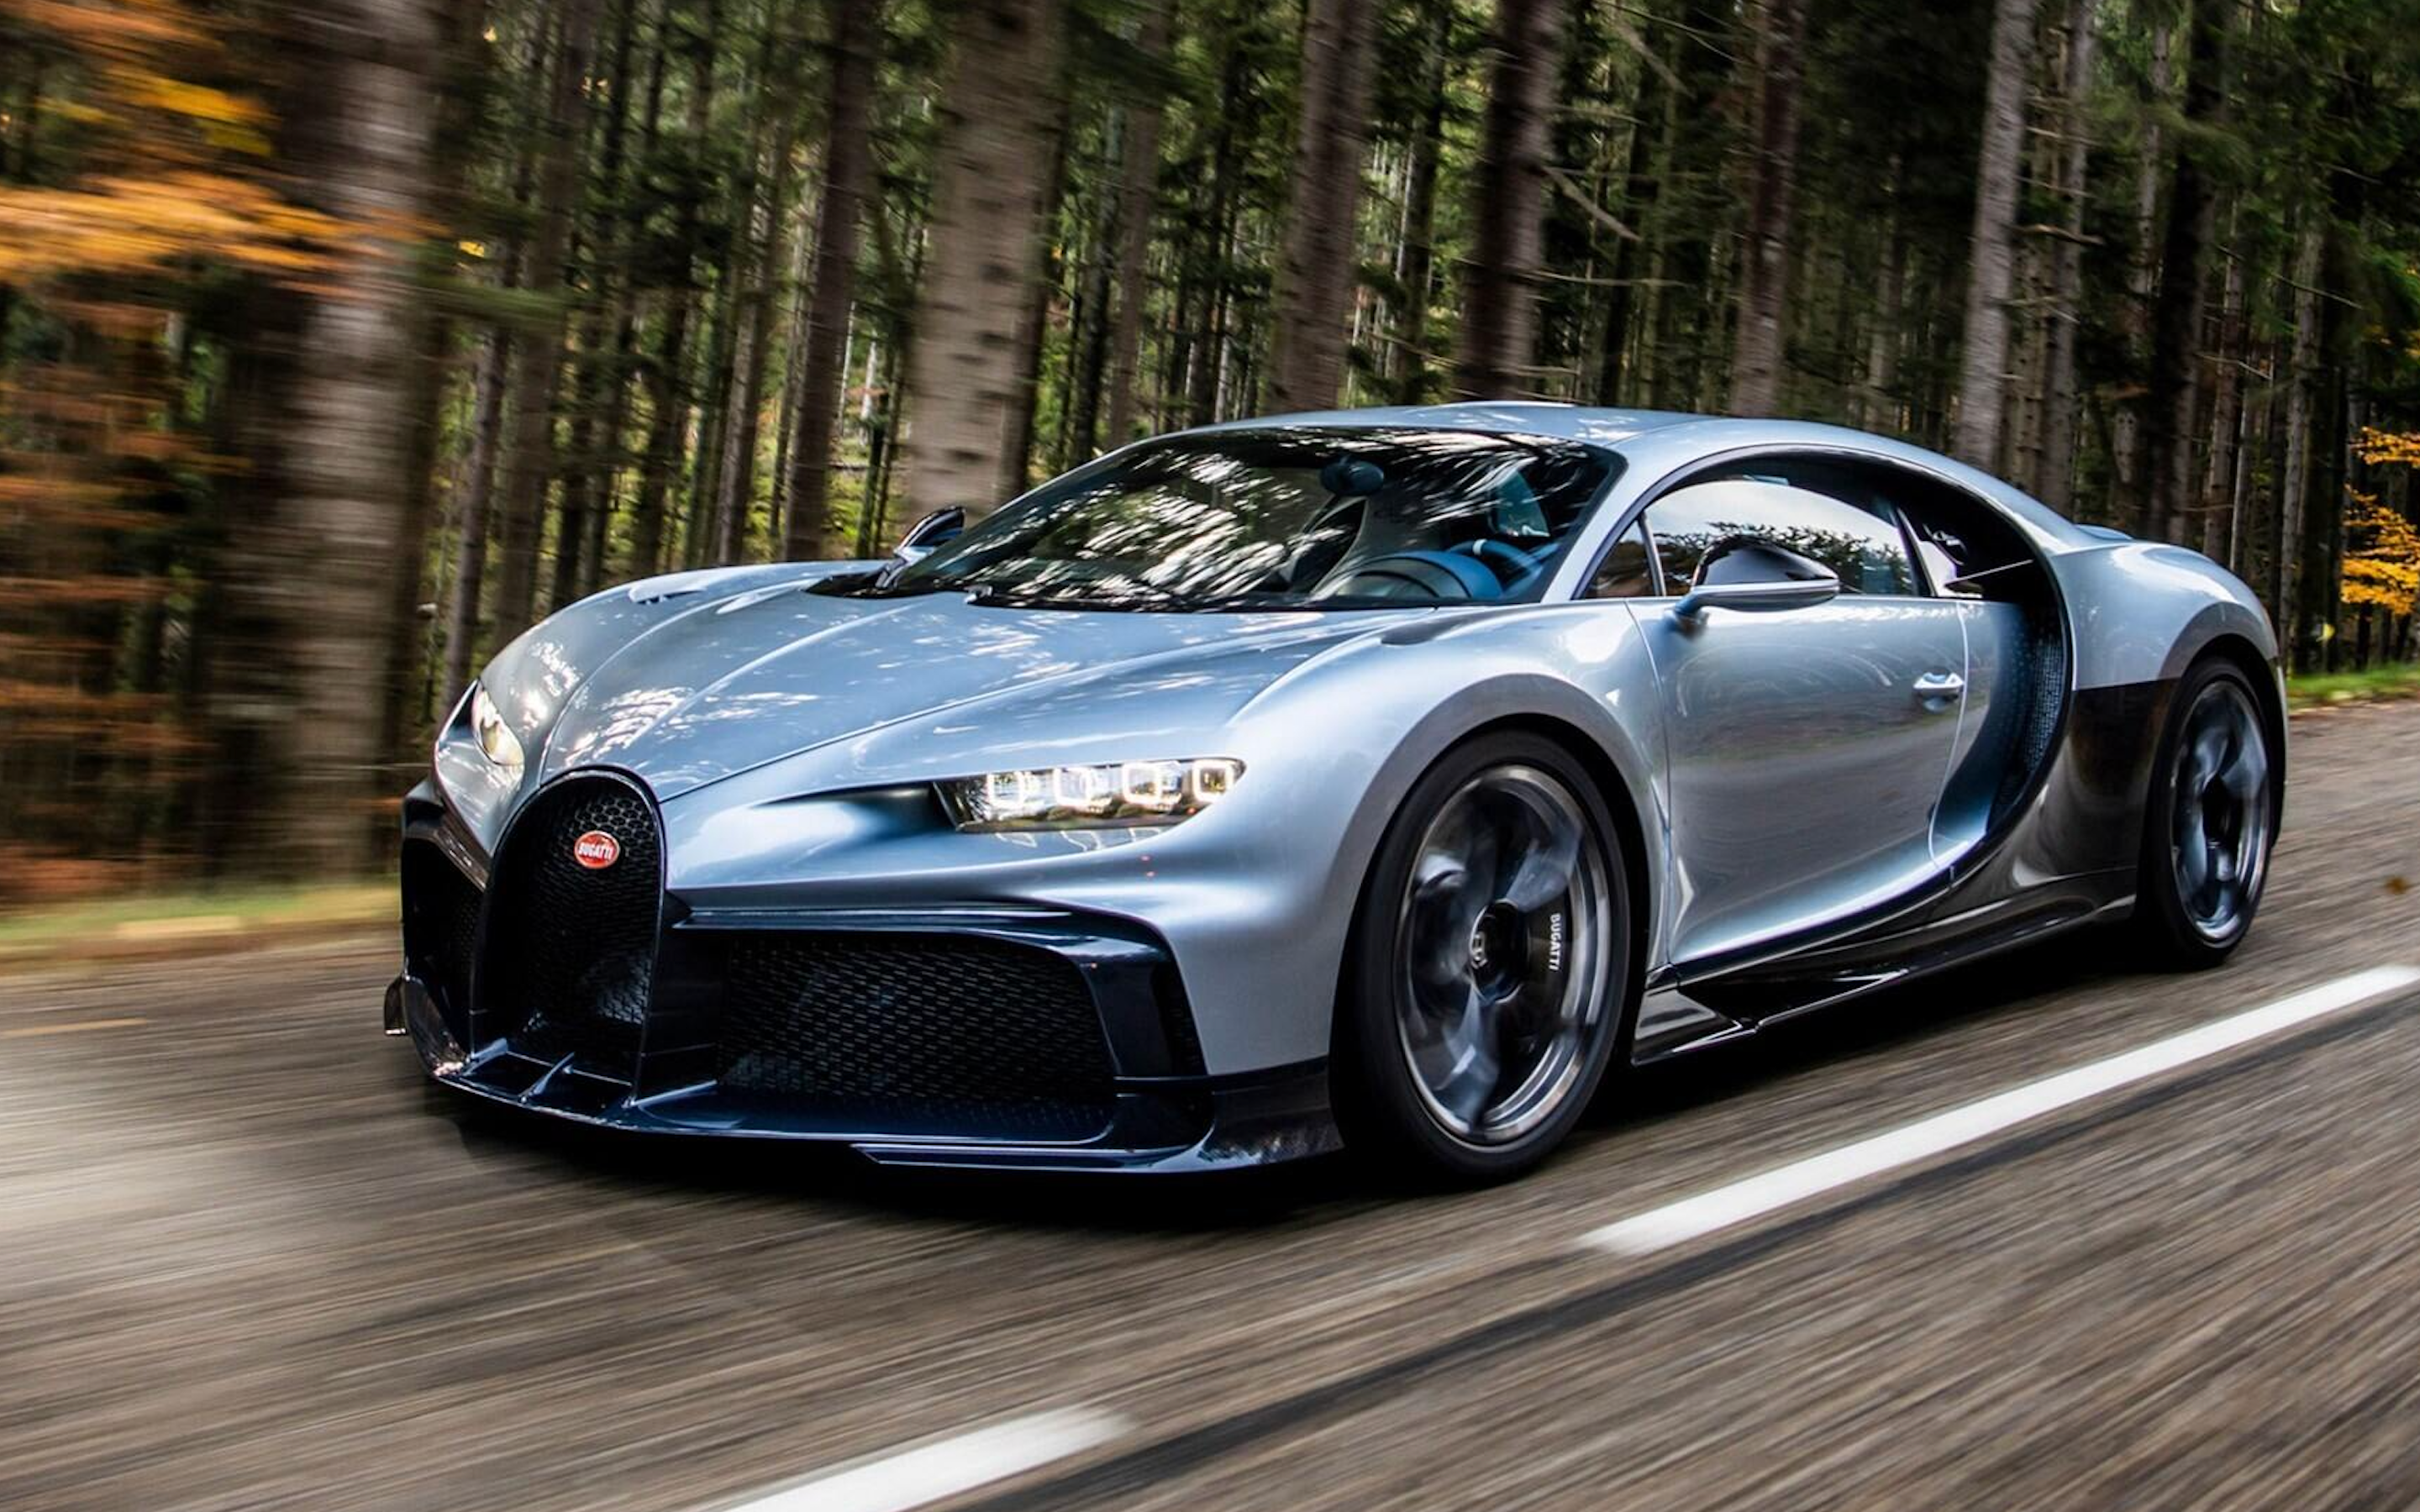 Blue 2022 Bugatti Chiron Profilee Driving Through Forests